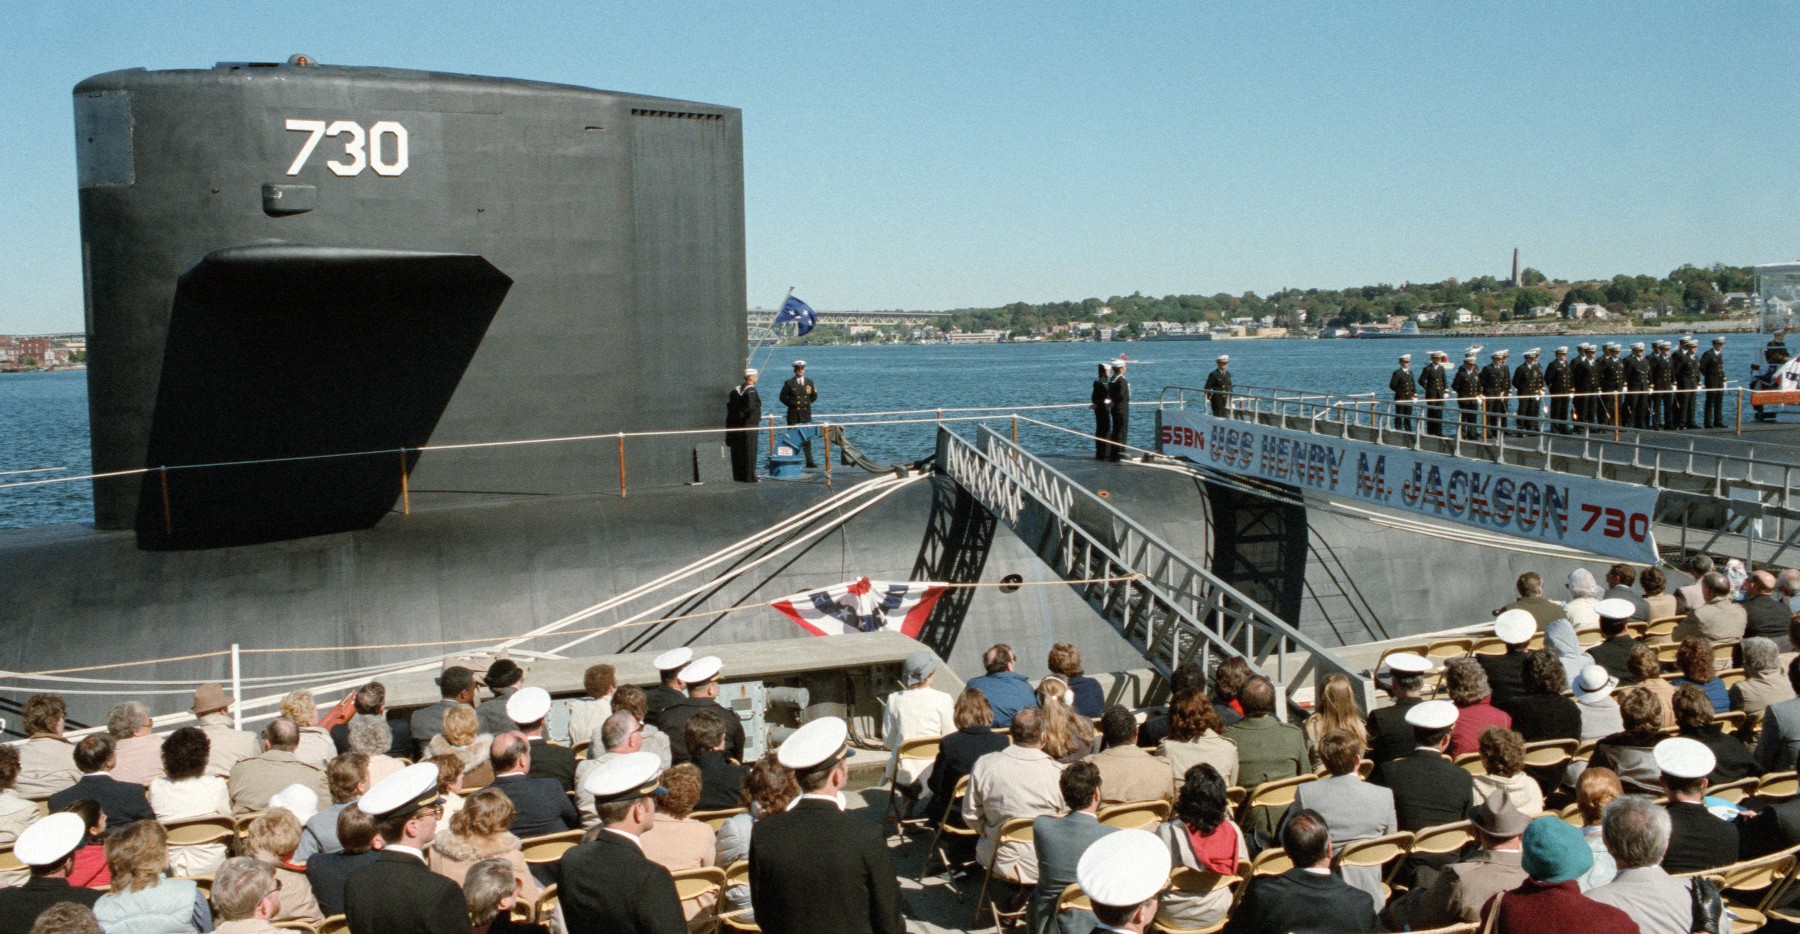 ssbn-730 uss henry m. jackson ohio class ballistic missile submarine 1984 39 commissioning ceremony groton connecticut